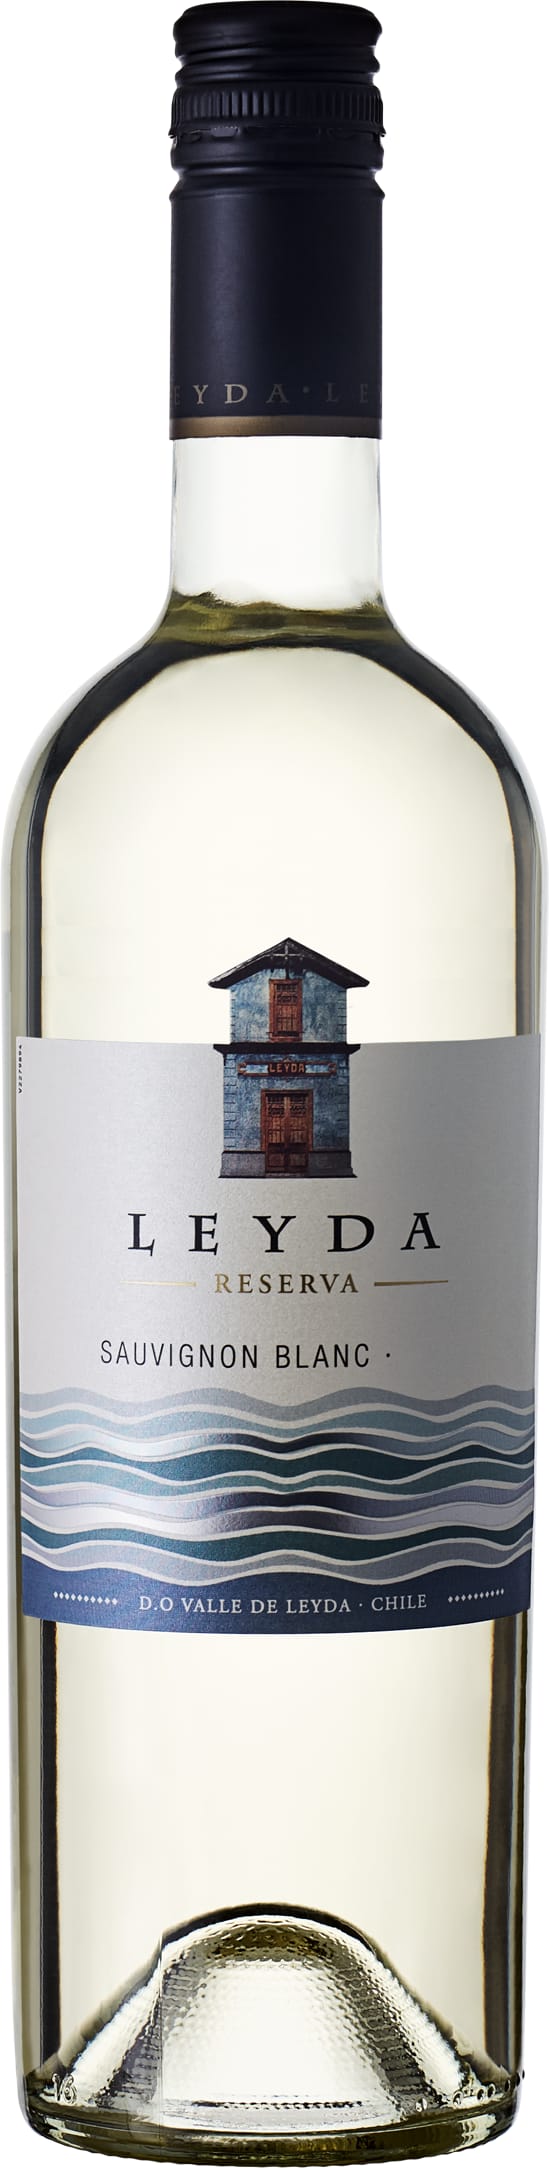 Sauvignon Blanc Reserva Retail 21 Leyda 75cl - Buy Vina Leyda Wines from GREAT WINES DIRECT wine shop